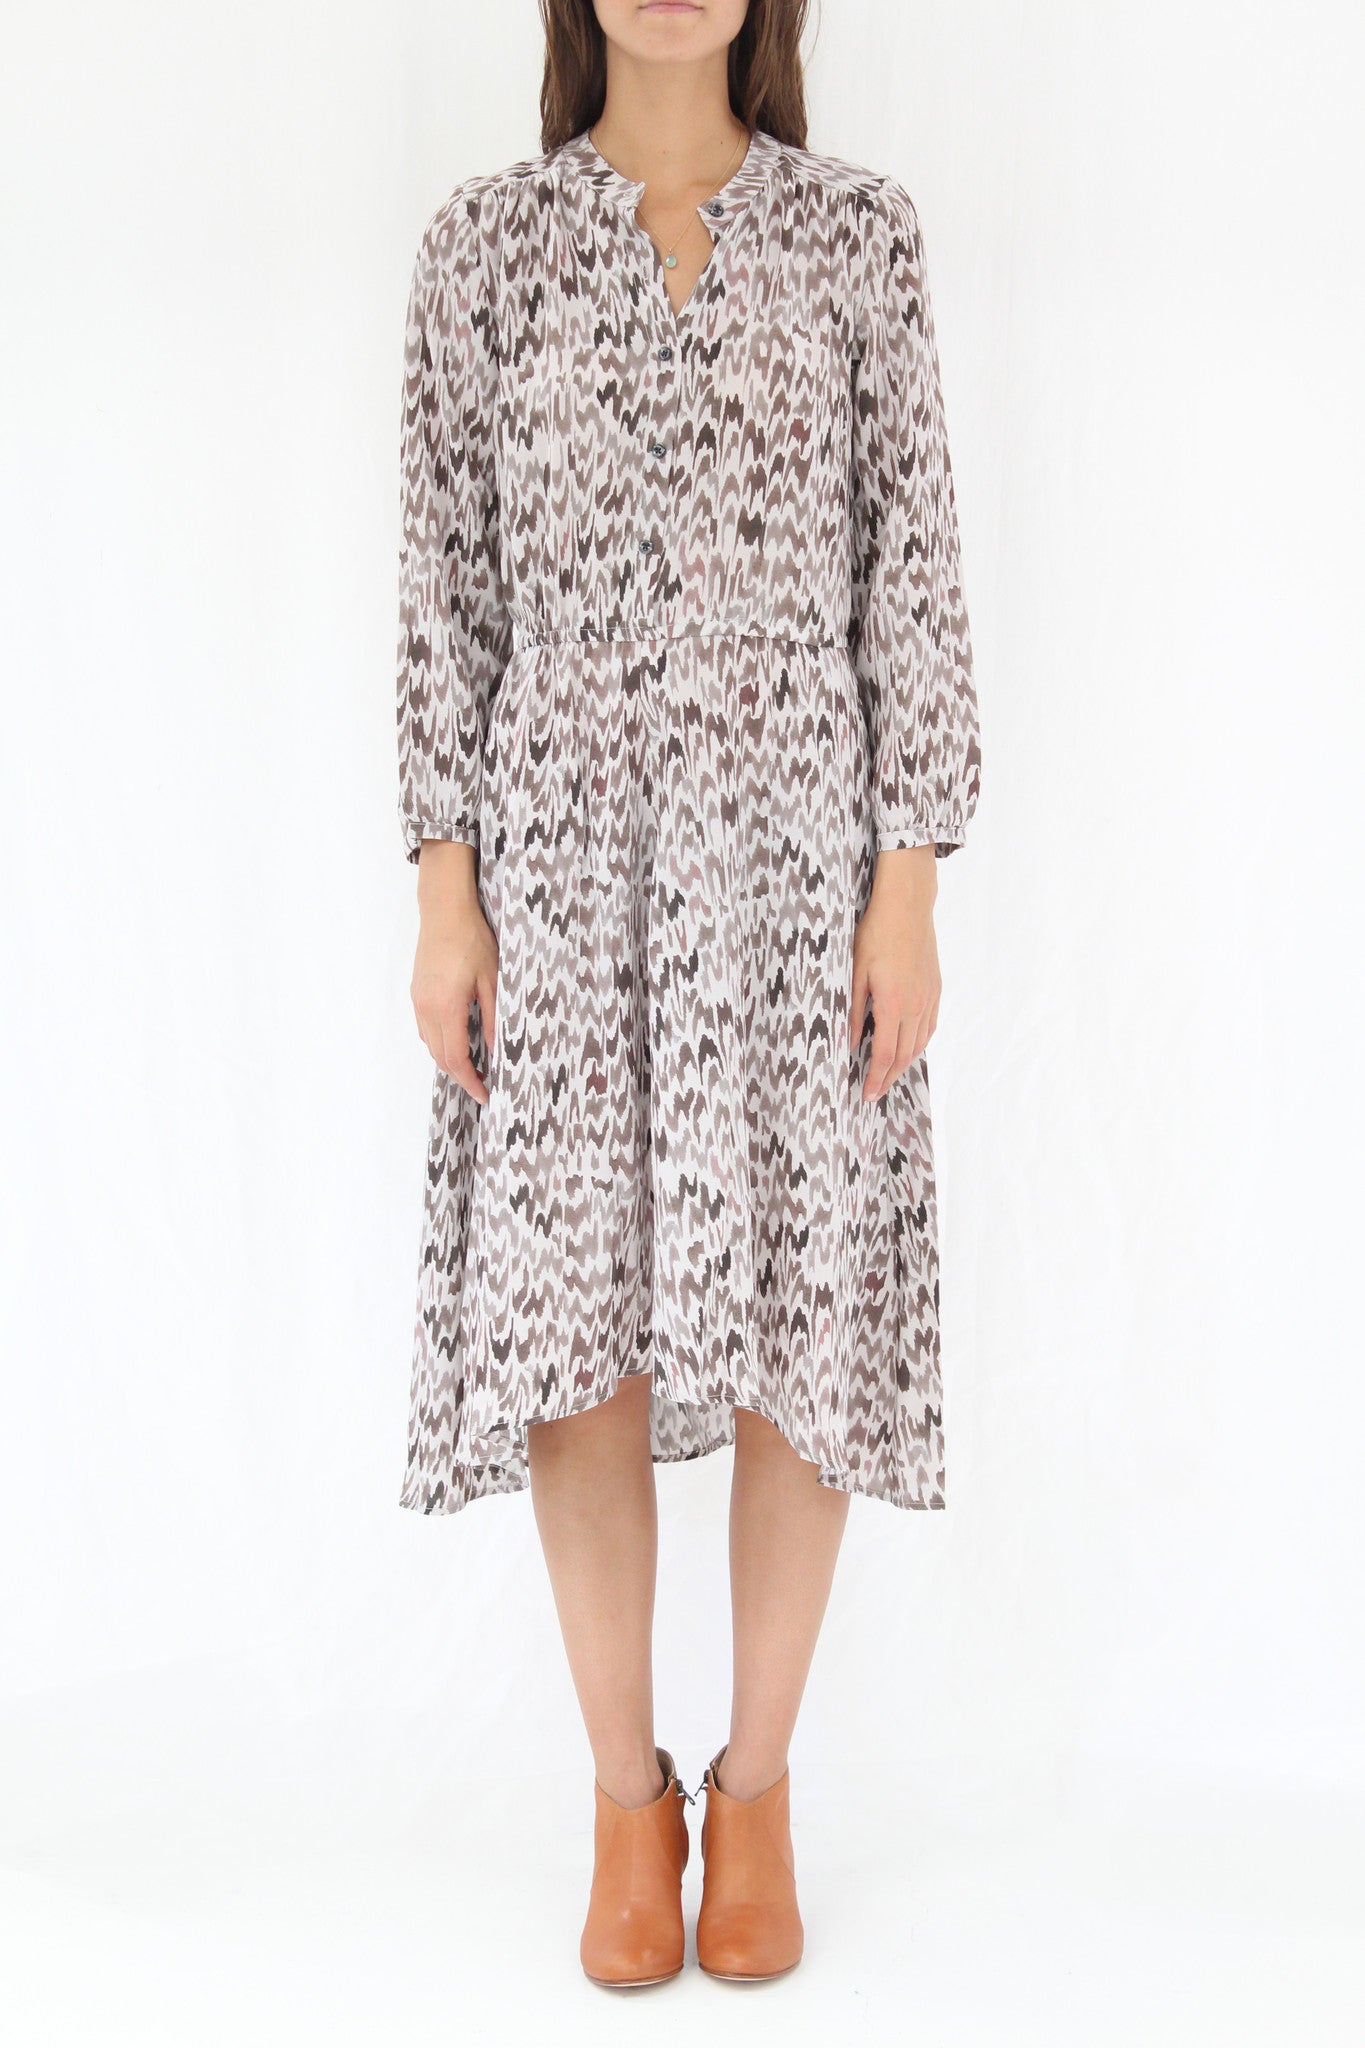 Beklina / Podolls Rowan Dress Hazel Silk